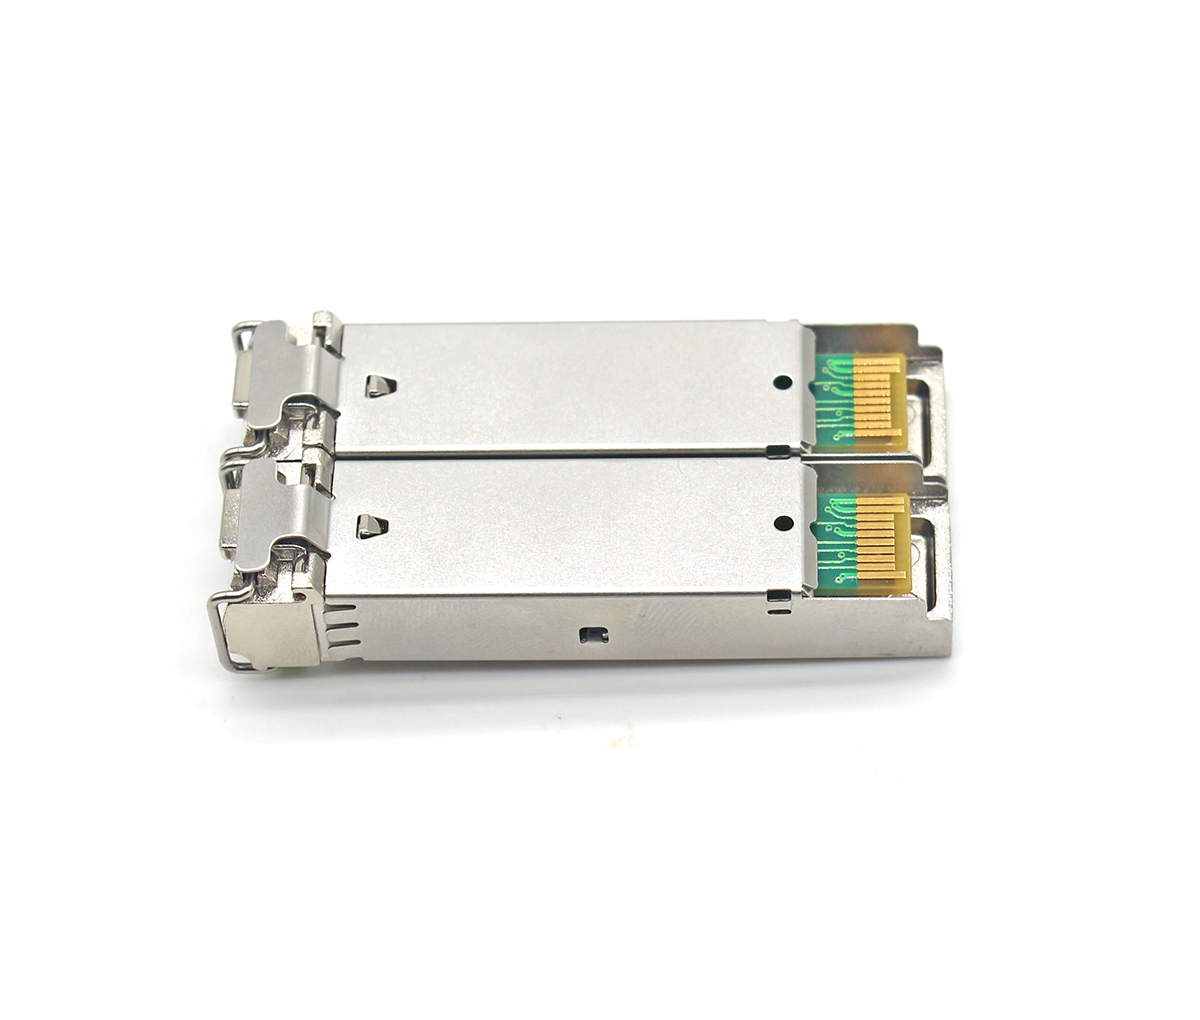 Why are the original optical modules so expensive?Brocade compatible SFP optical transceiver